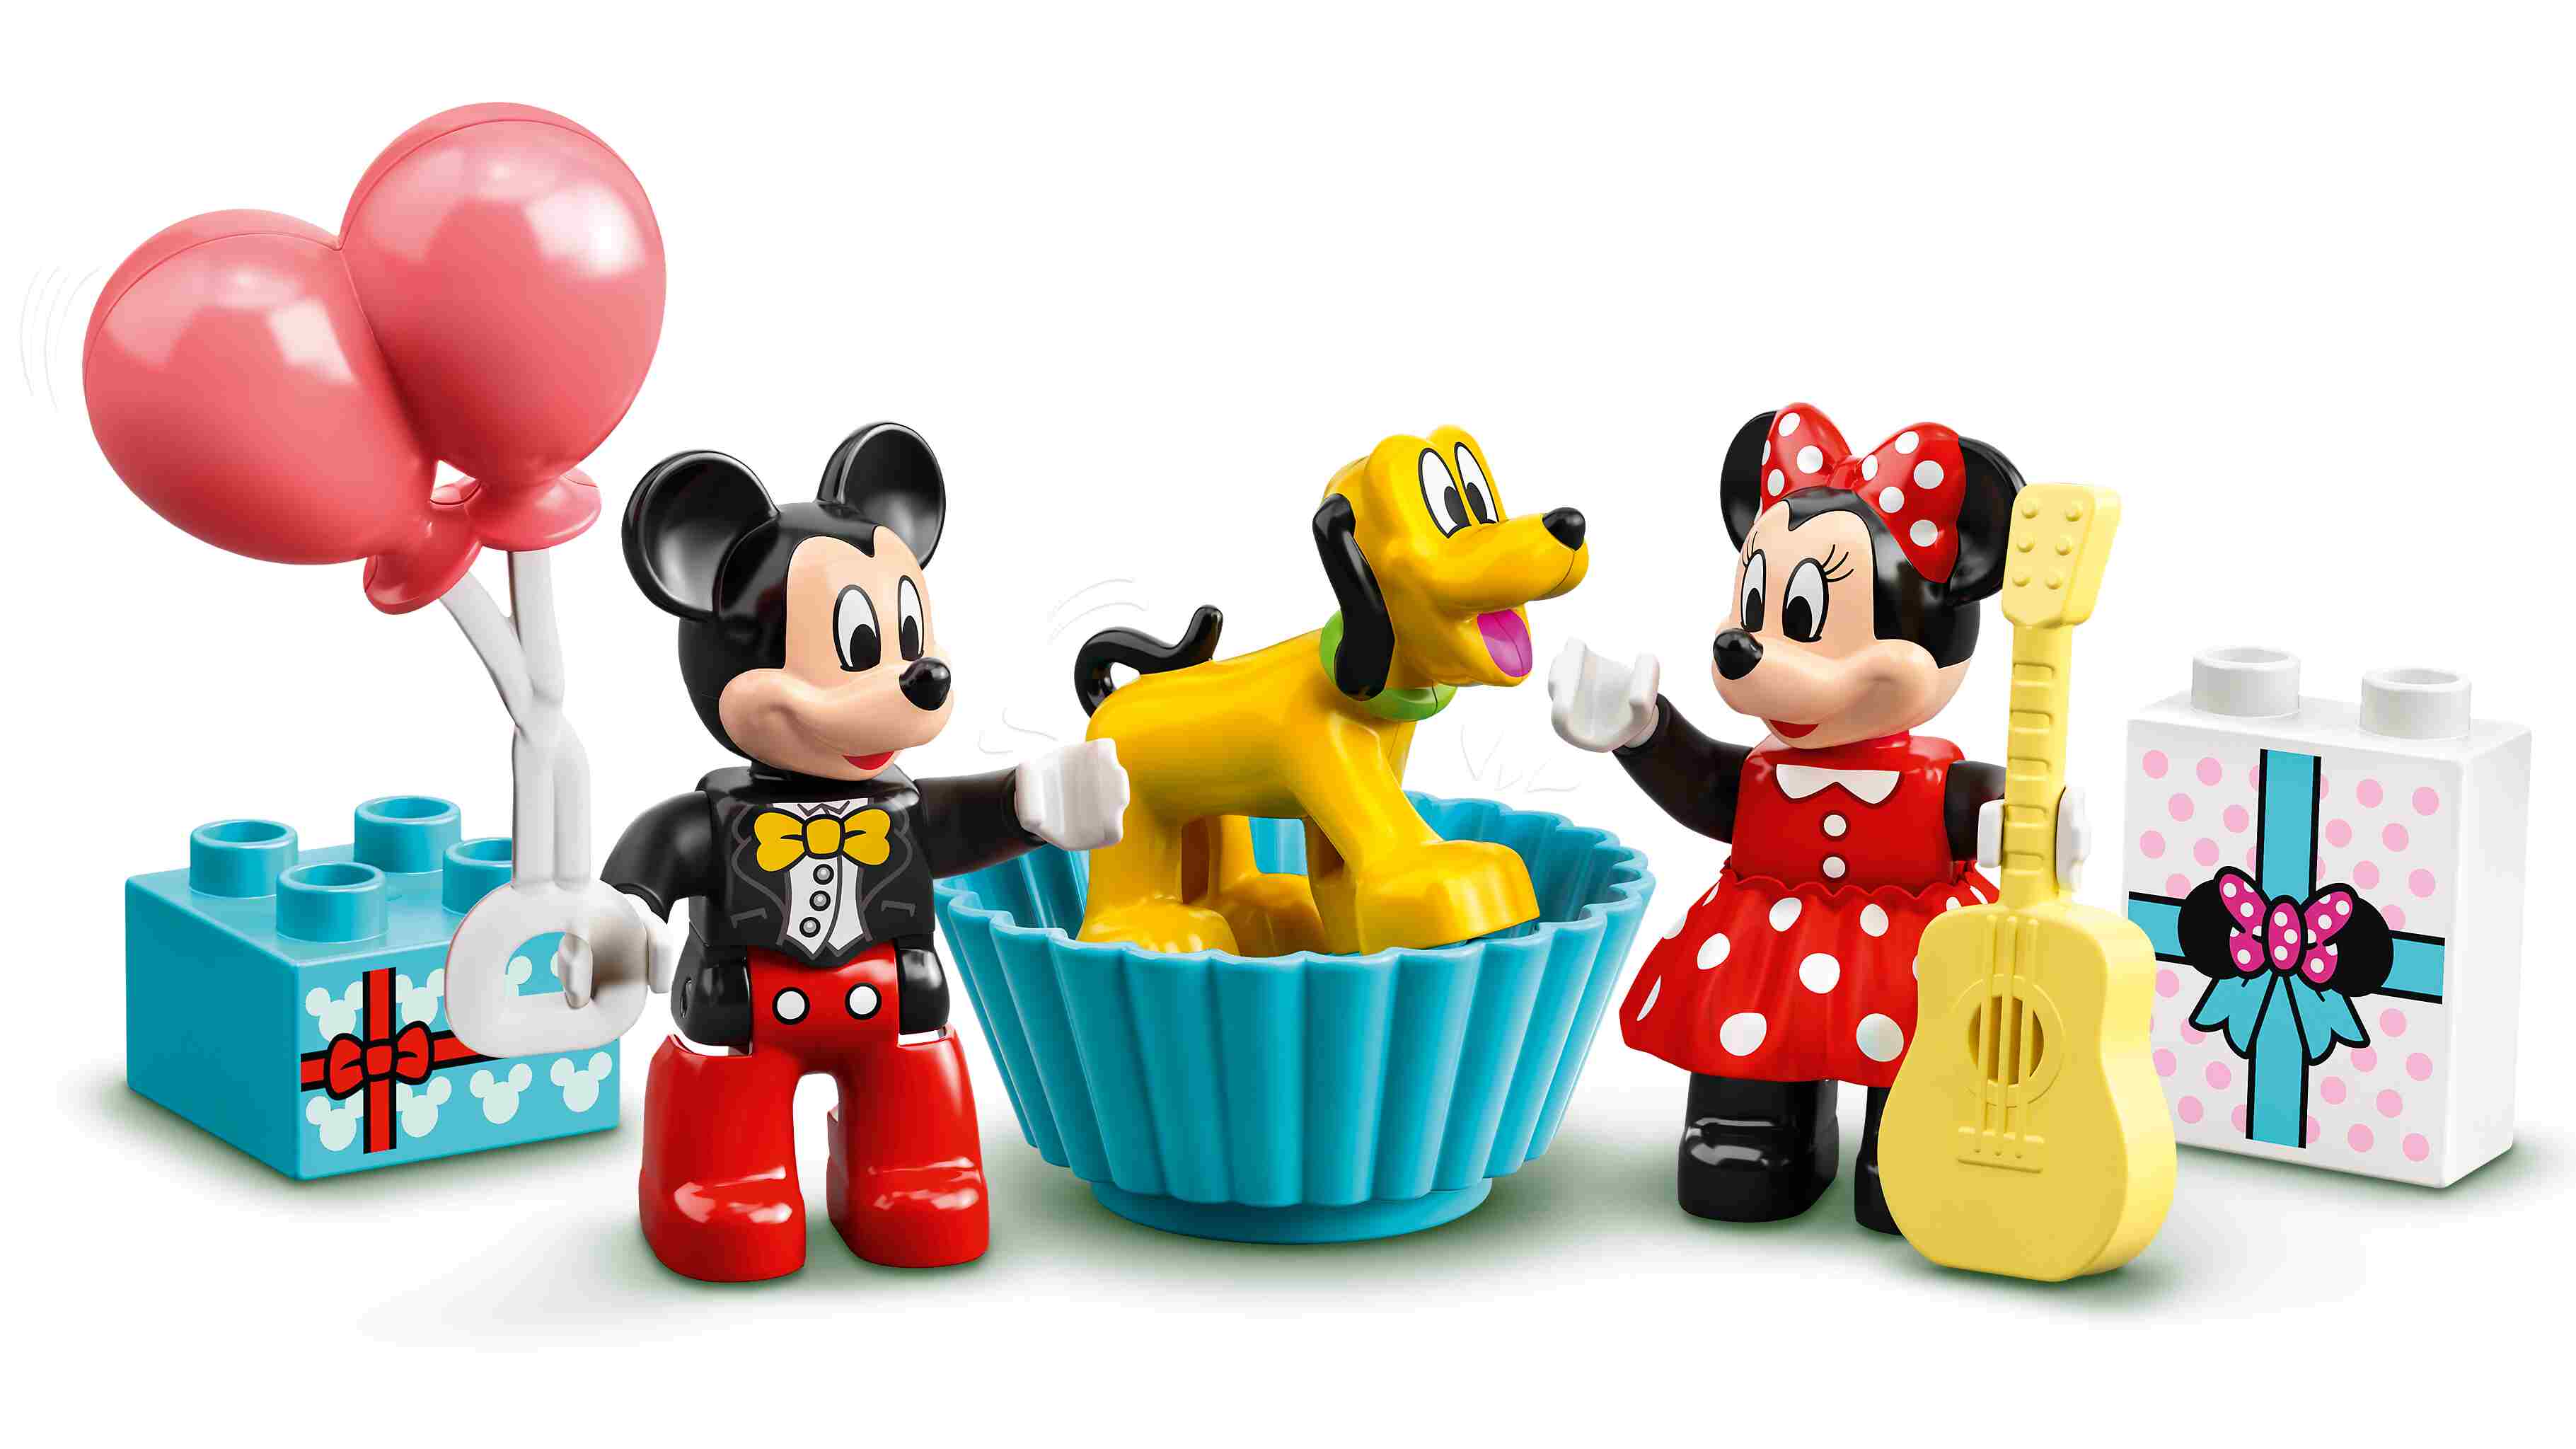 LEGO 10941 DUPLO Disney Mickys und Minnies Geburtstagszug, mit Pluto